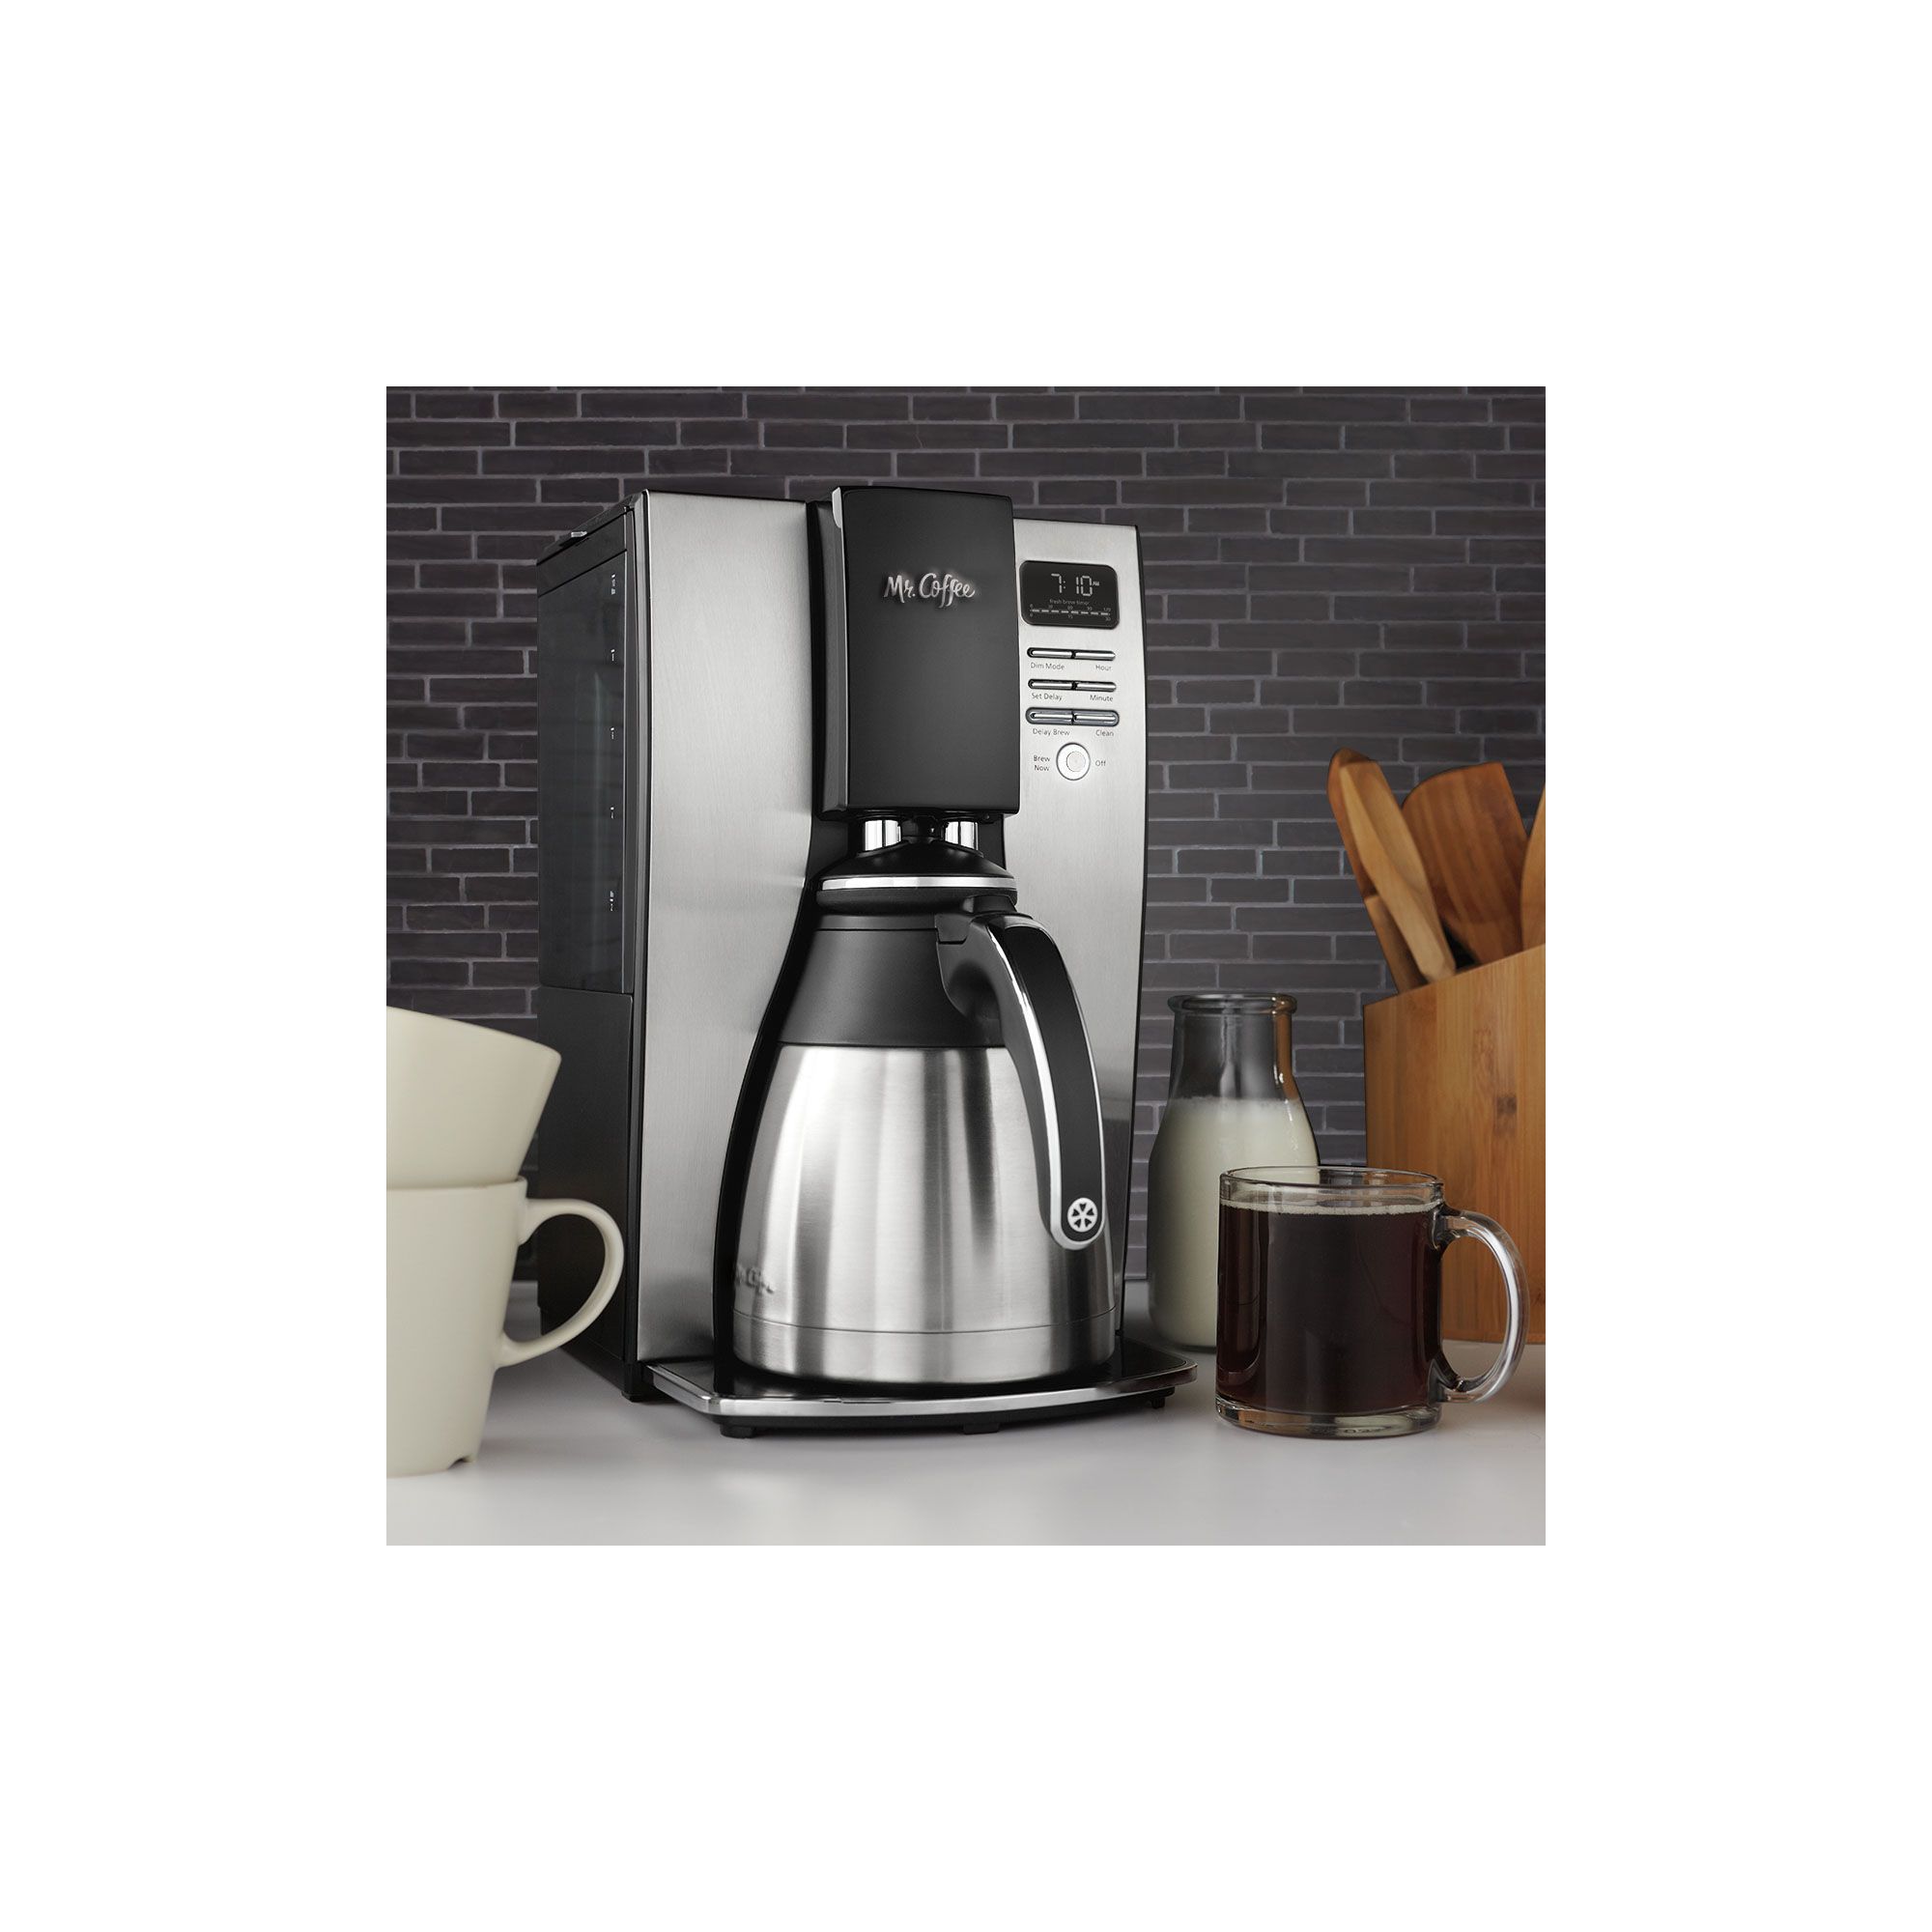 Mr Coffee MPX30 10 Cup Coffee Maker Brewer Machine W/ Carafe